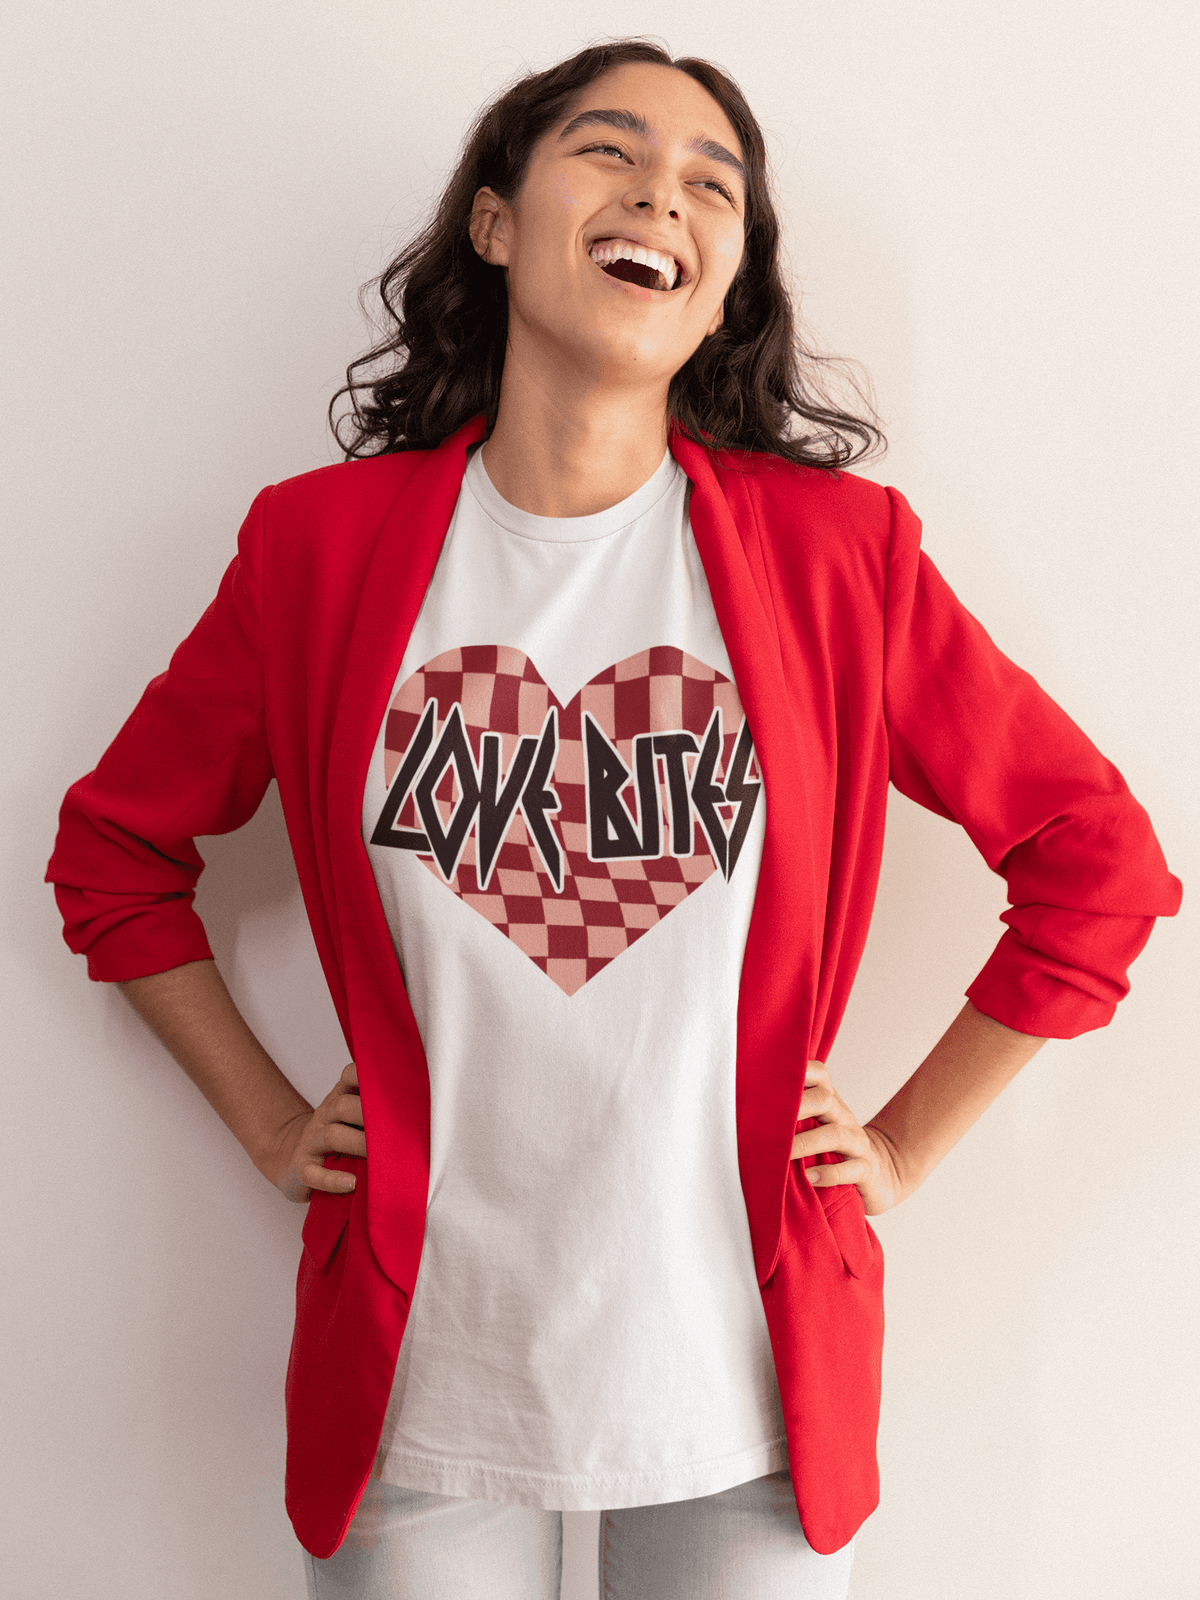 LOVE BITES VALENTINE T-shirt-Regular Fit Tee-StylinArts